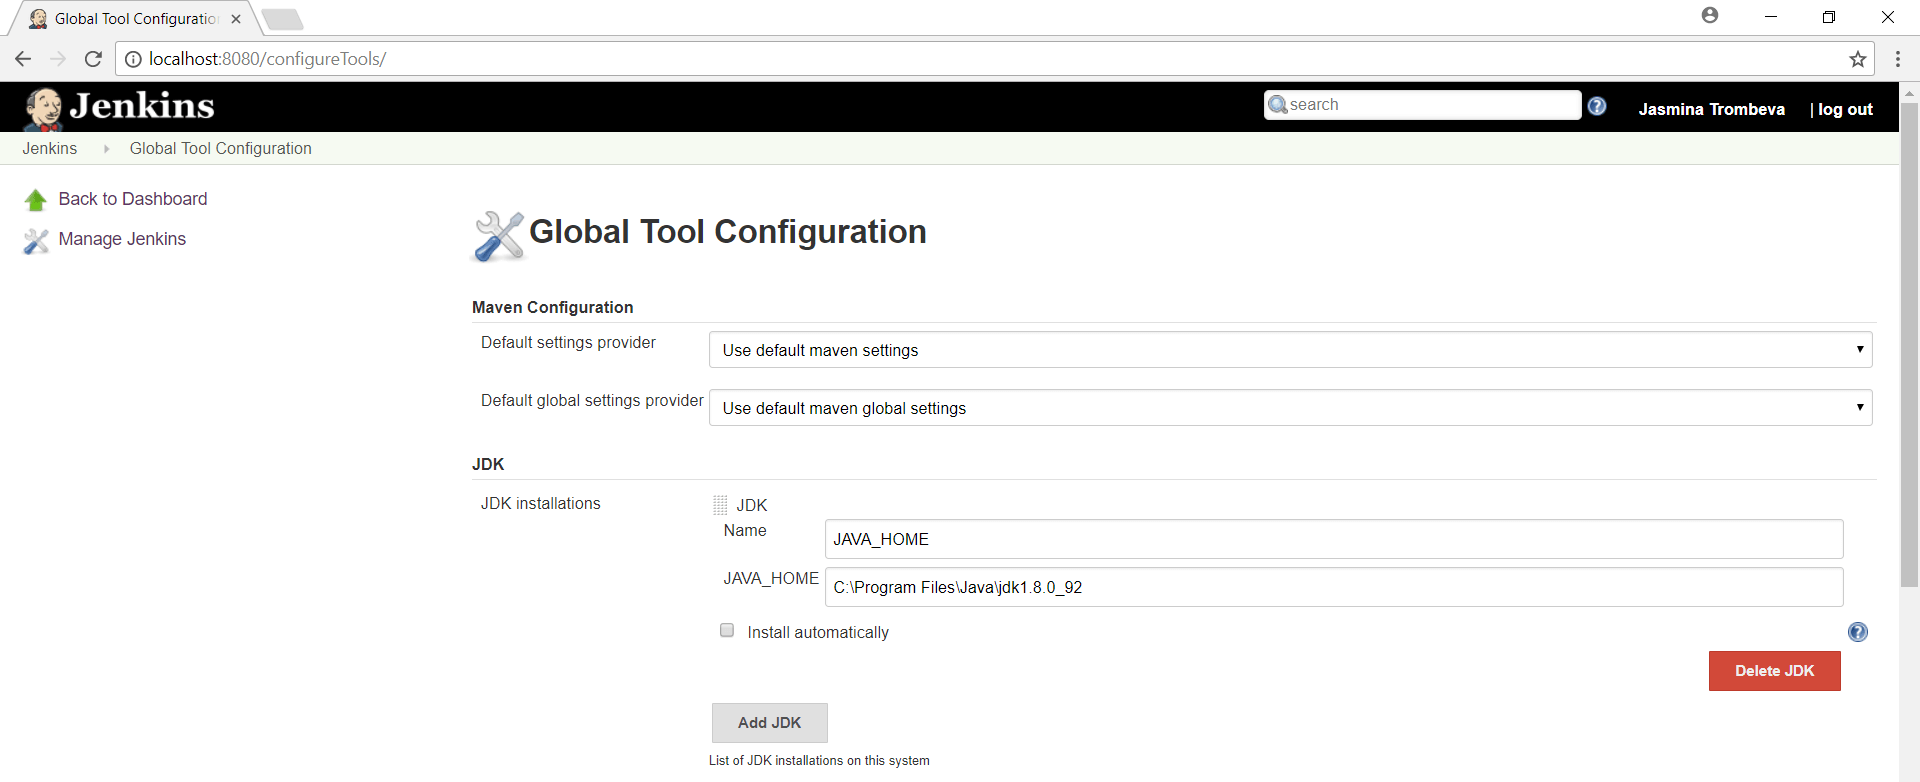 Global Tool Configuration Screen